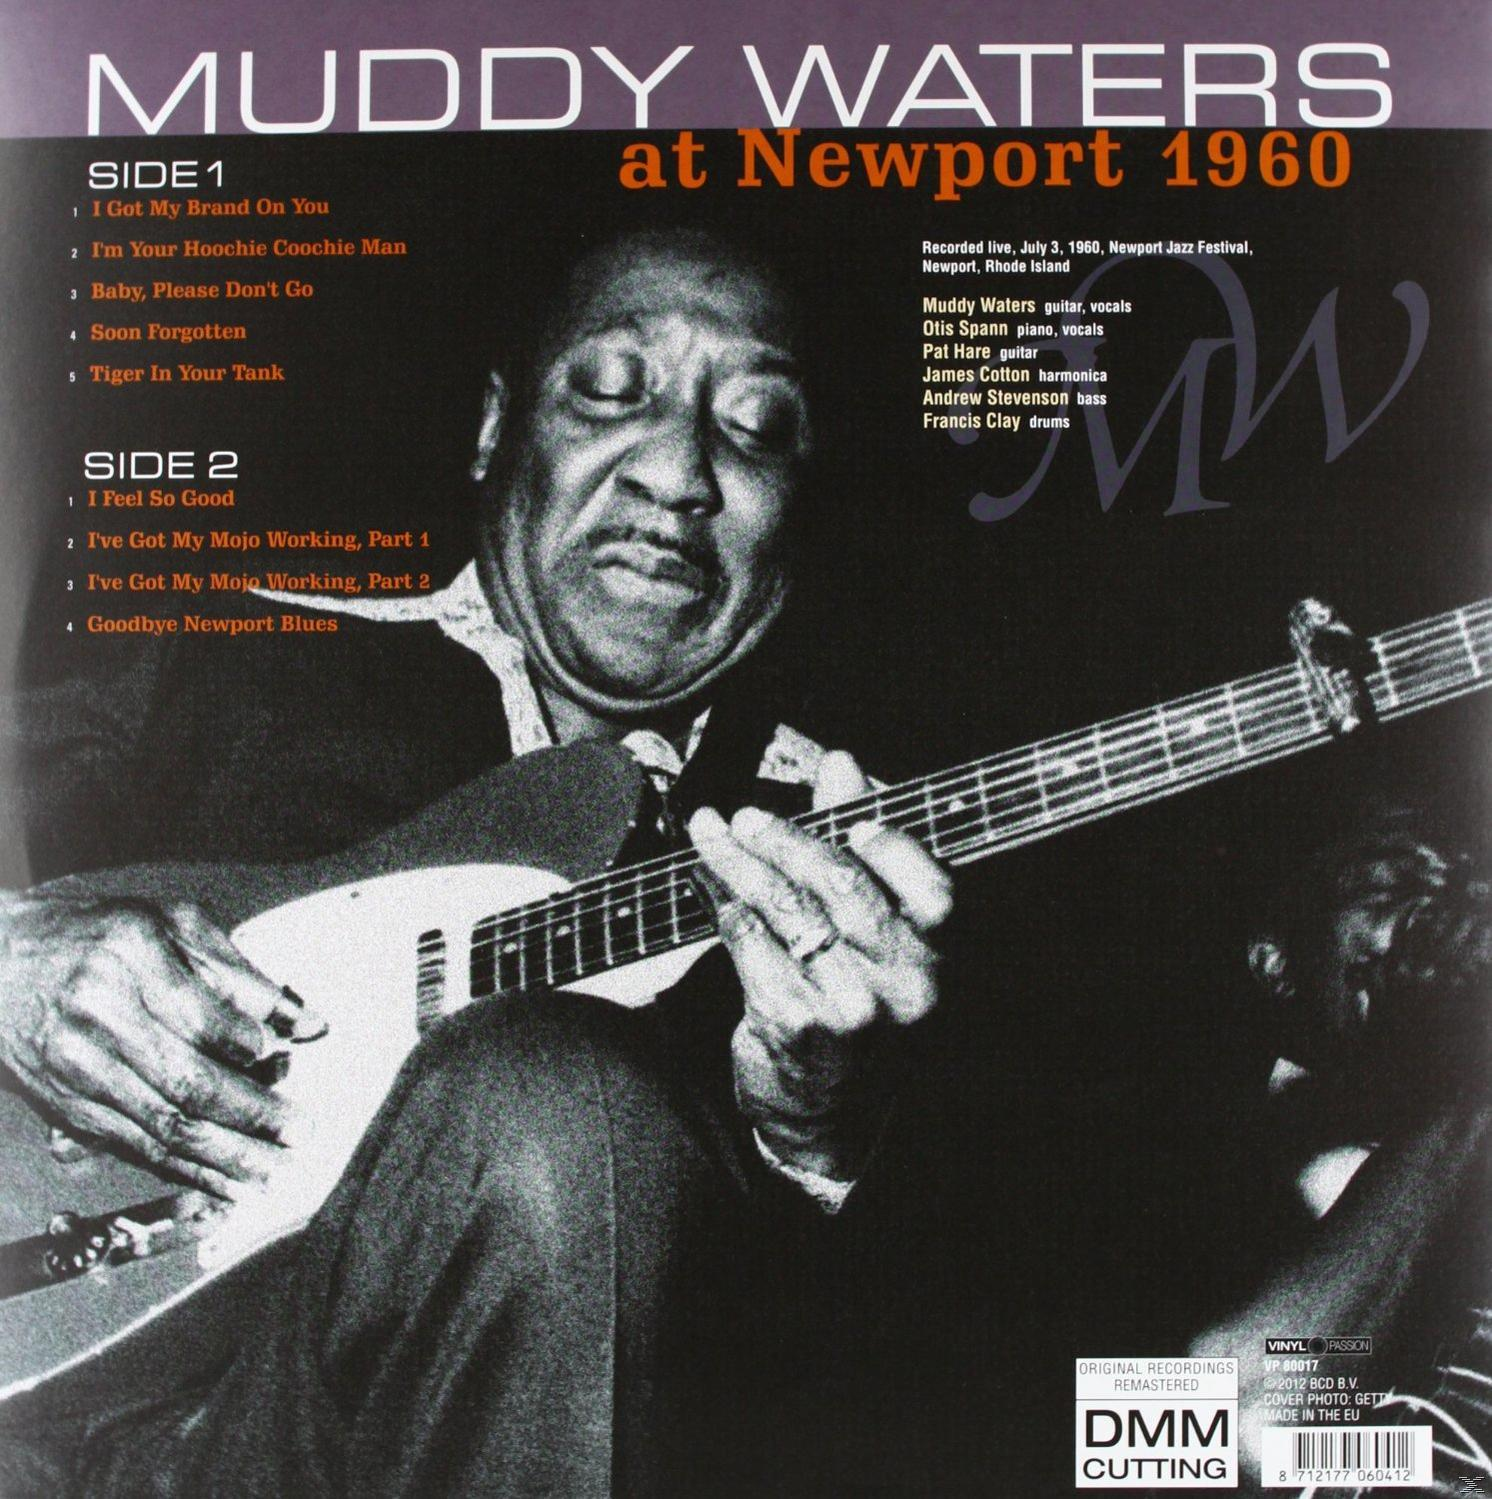 AT Waters NEWPORT 1960 - (Vinyl) Muddy -